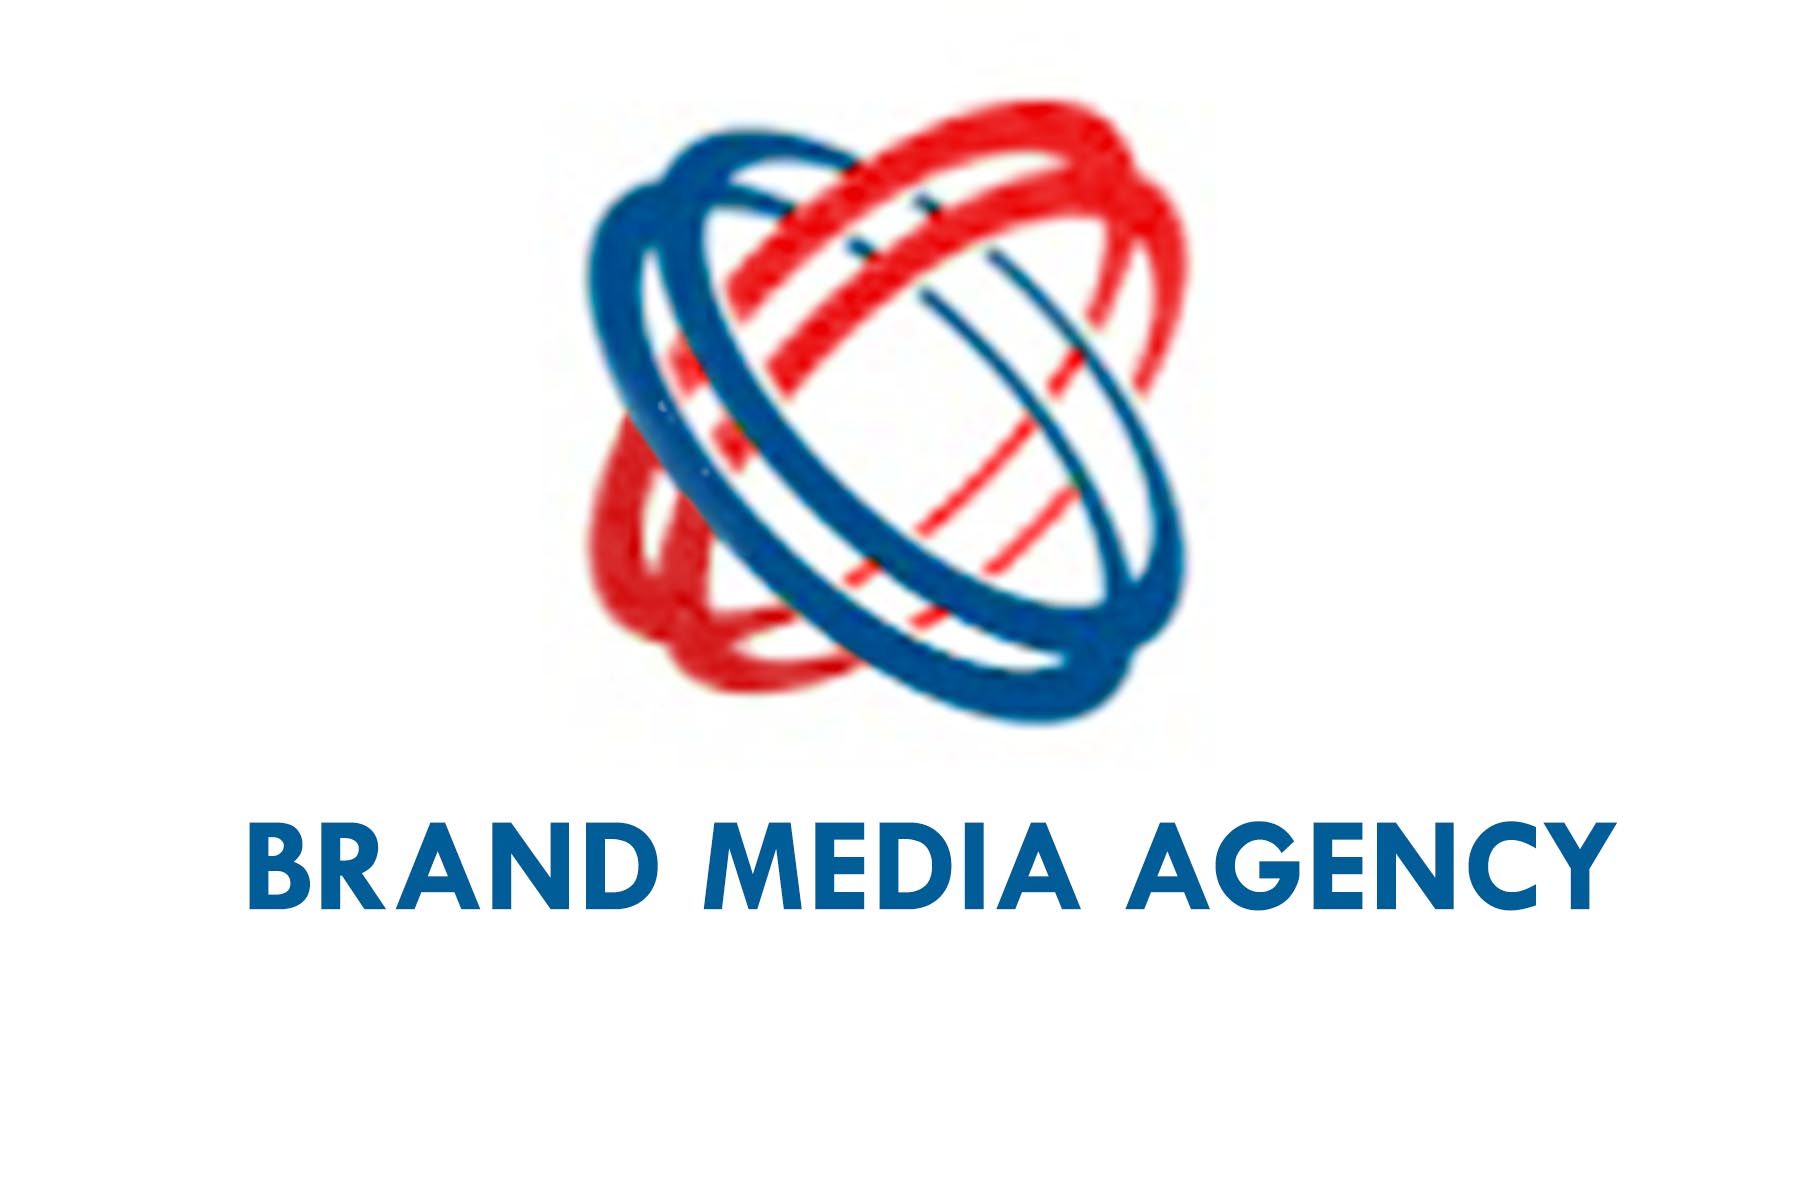 Media agency